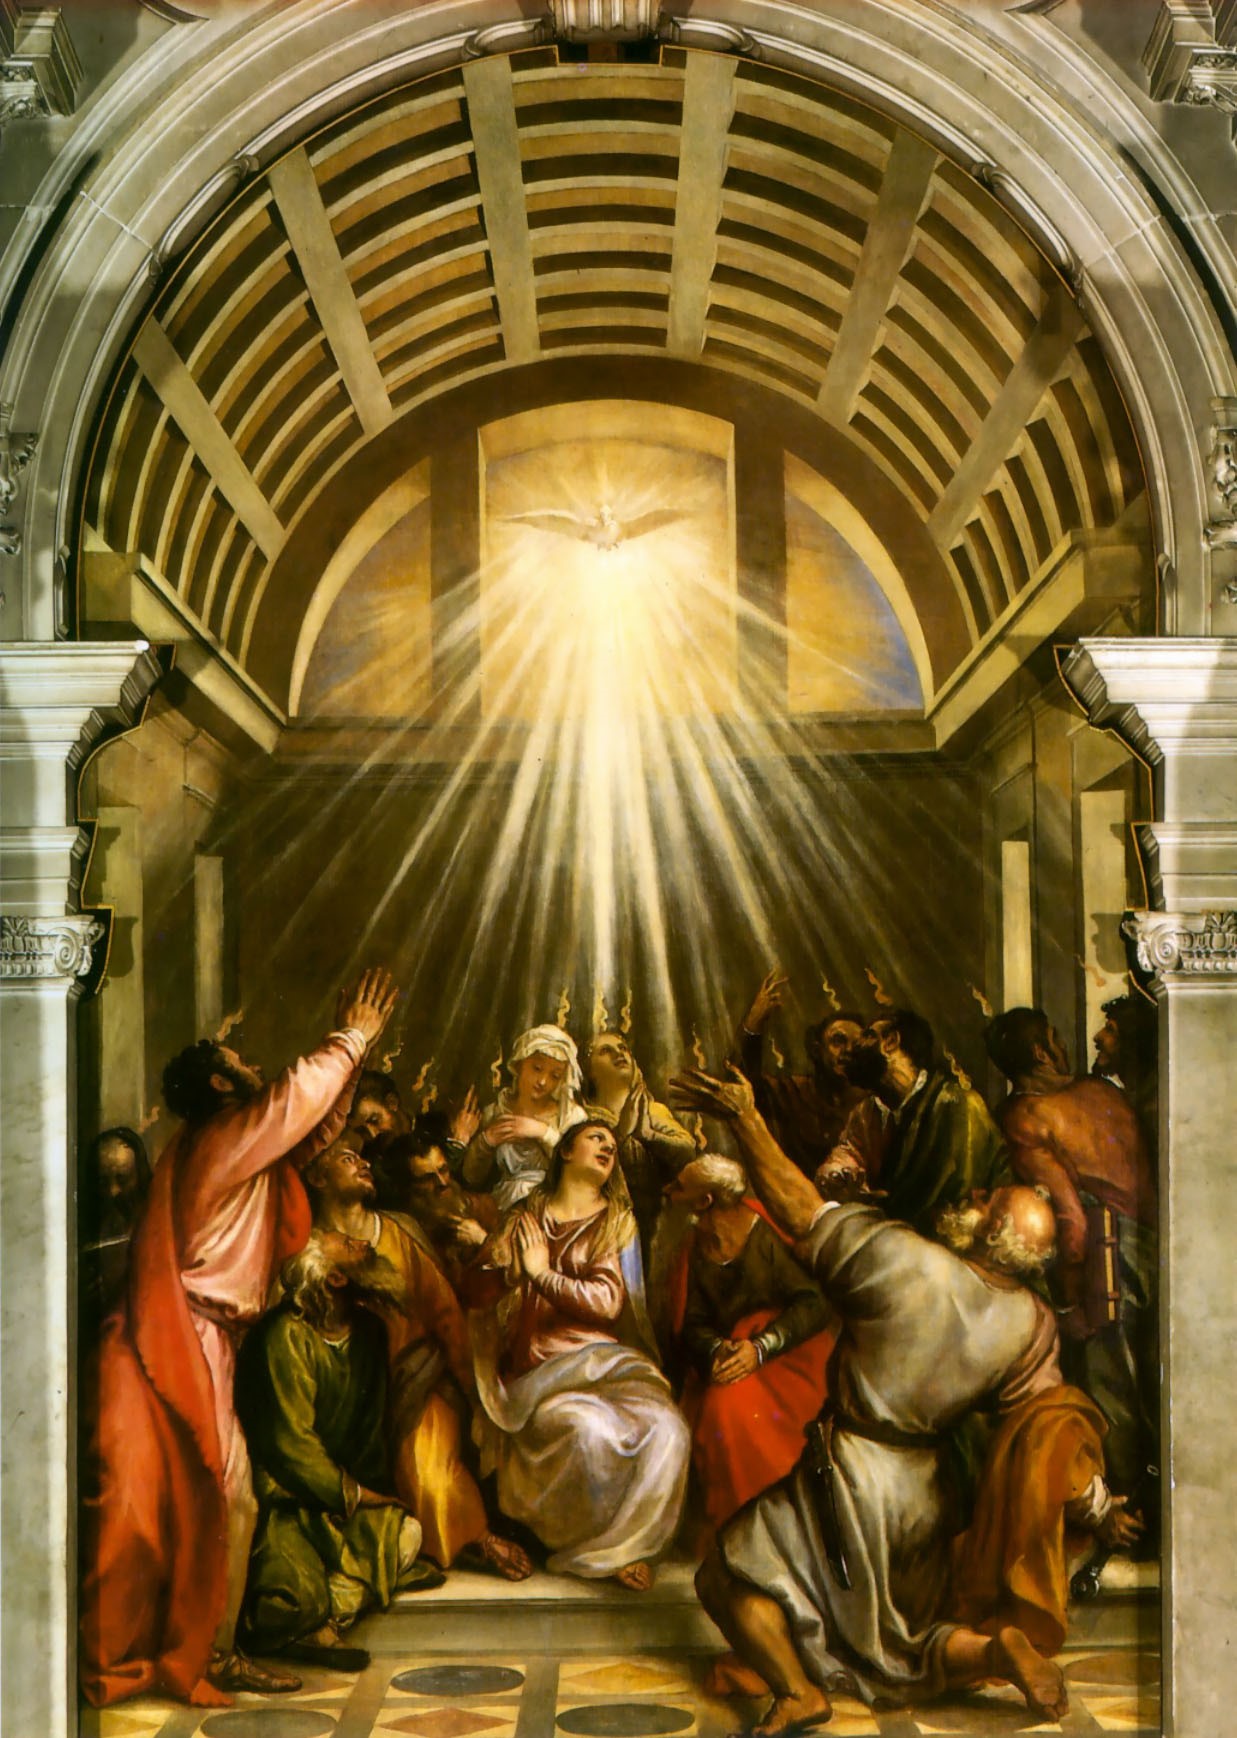 The Holy Spirit descending on the Apostles